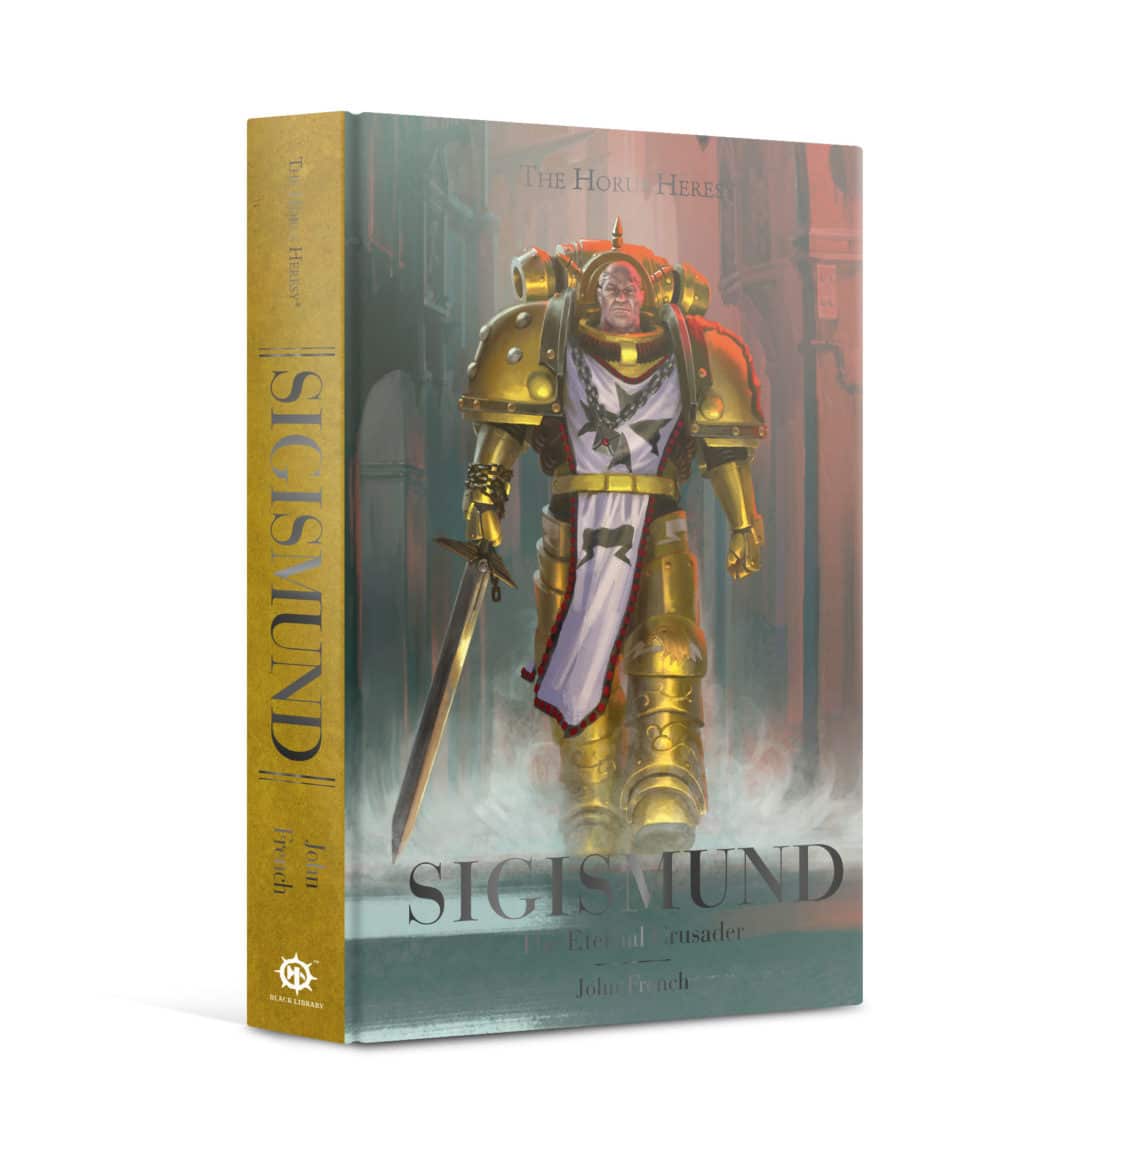 Sigismund: The Eternal Crusader (HB)